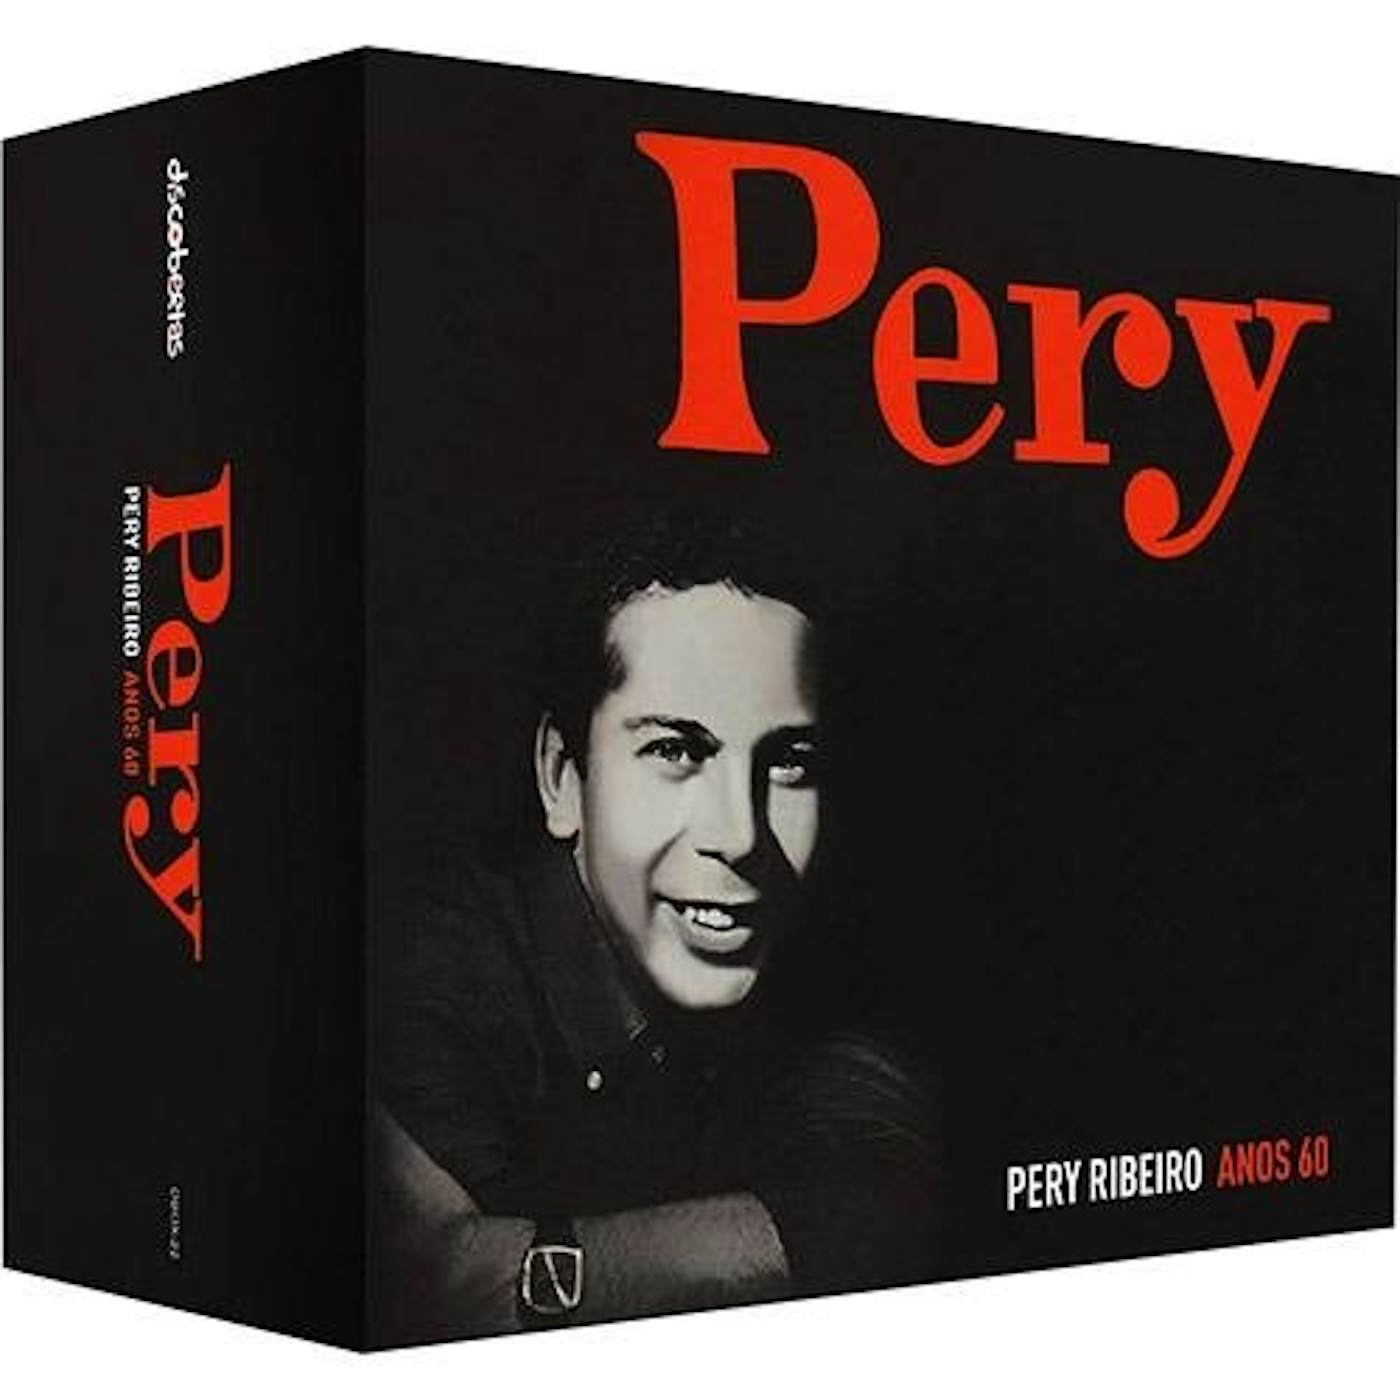 Pery Ribeiro ANOS 60 BOX CD